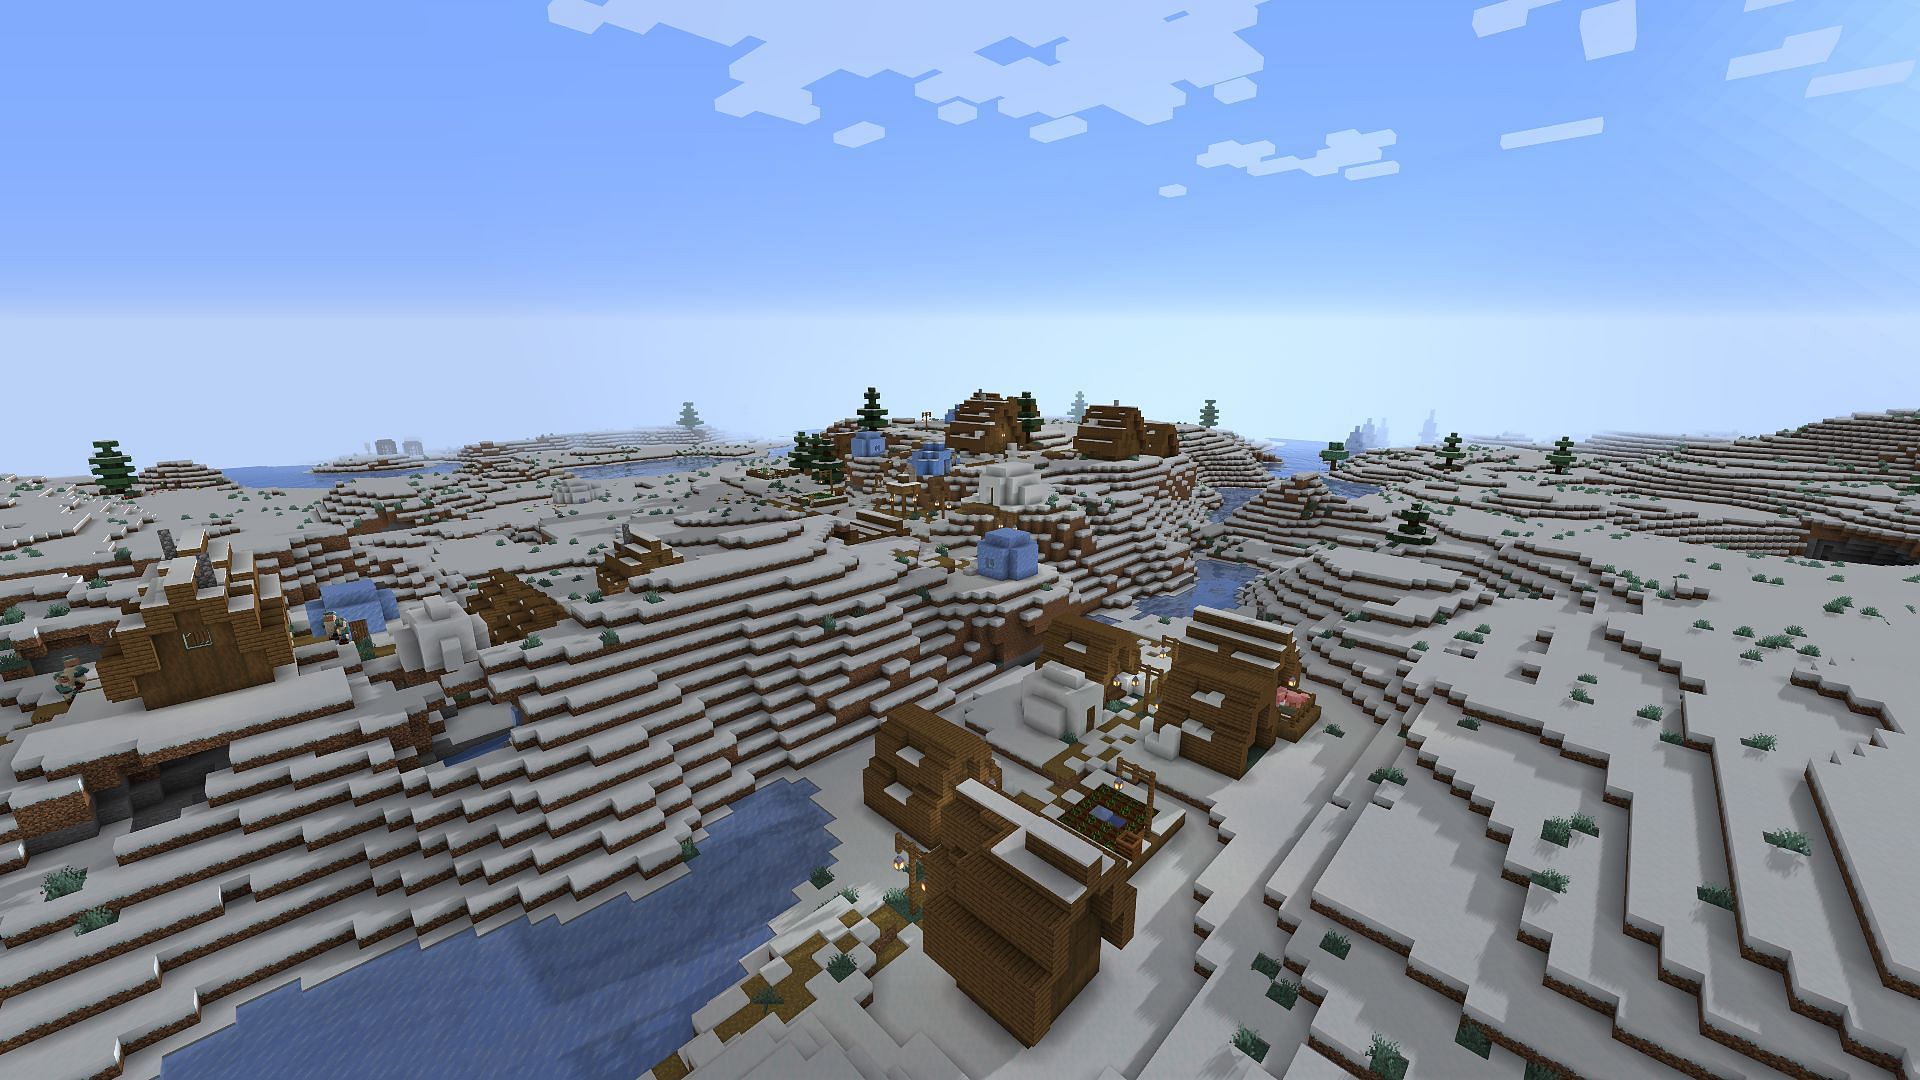 The snowy village the player spawns next to (Image via Minecraft)